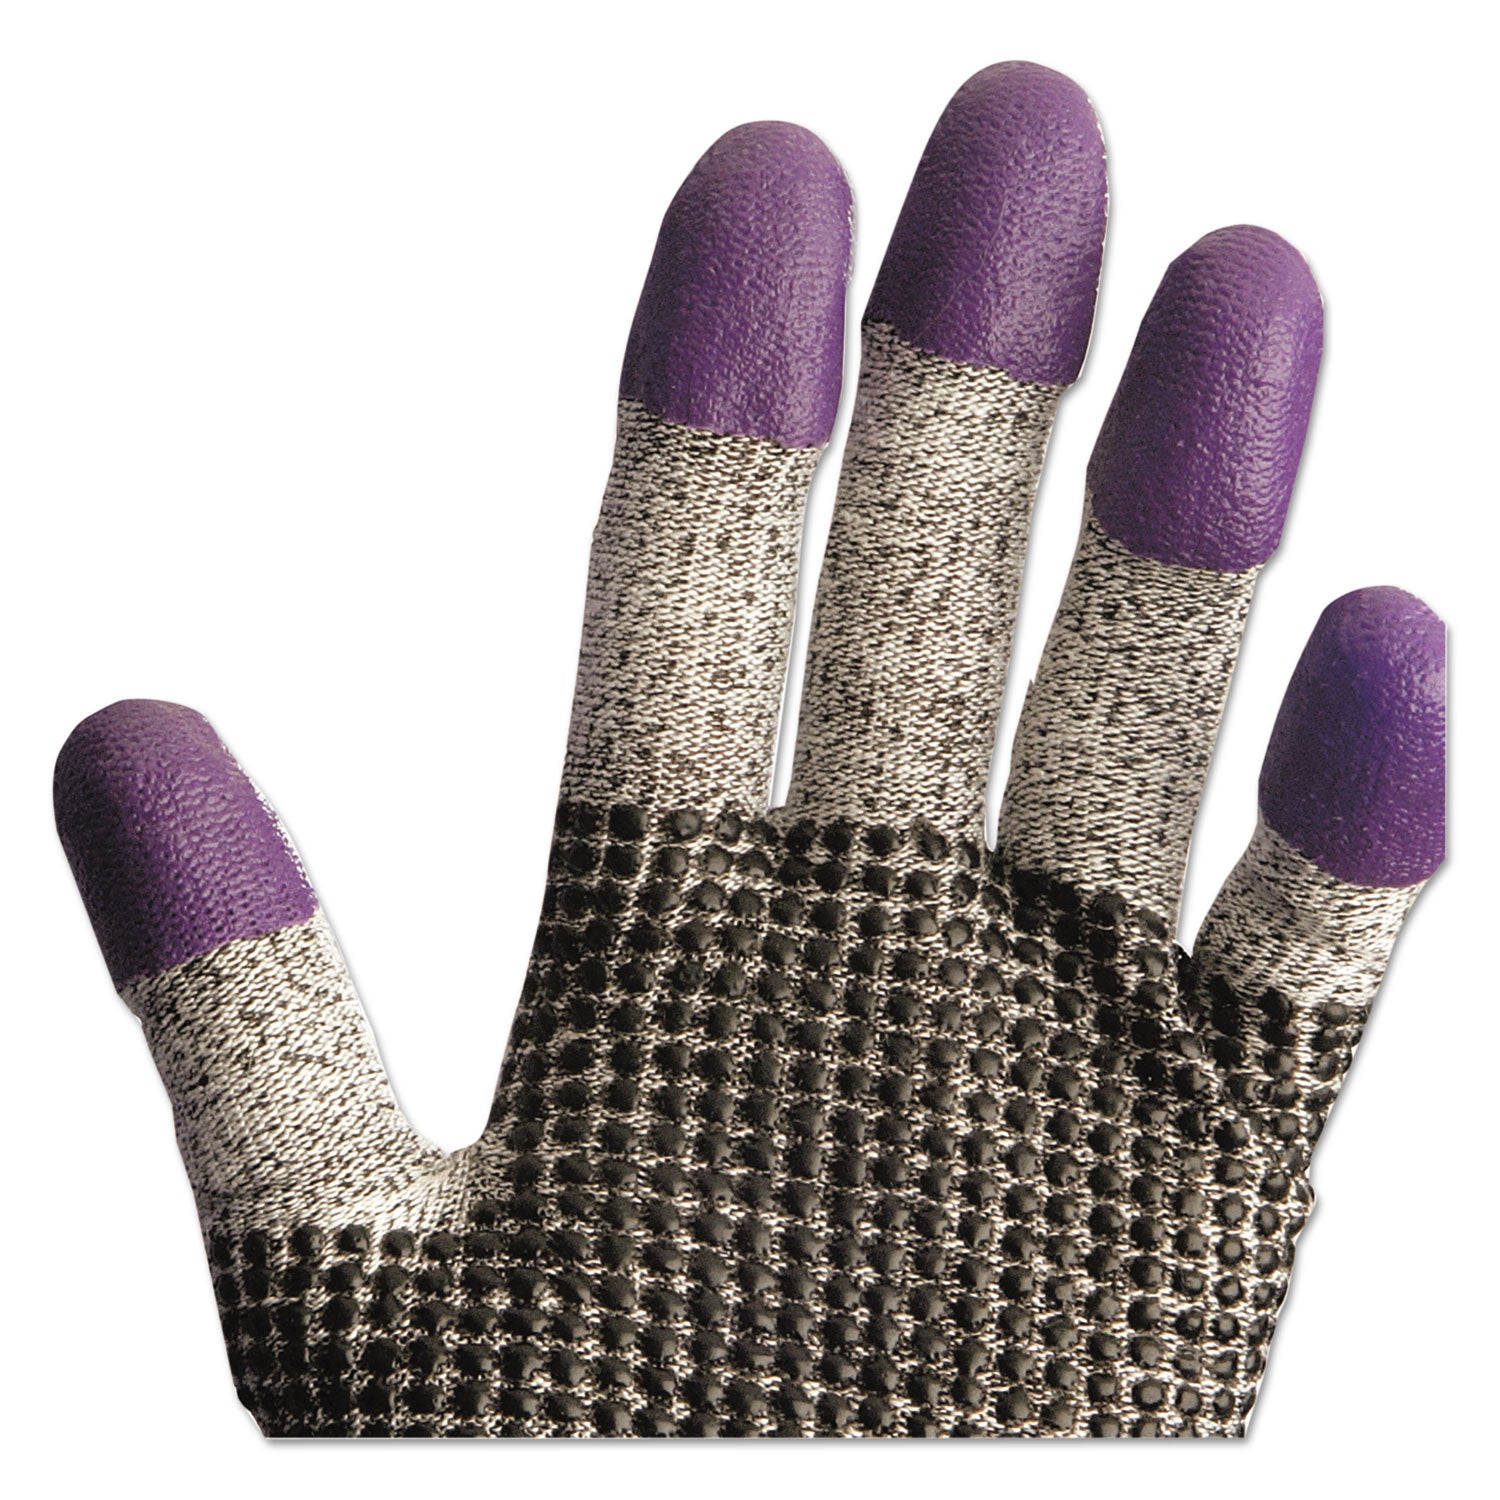 G60 Purple Nitrile Gloves, 240mm Length, Large/Size 9, Black/White, 12 Pairs/Carton - 